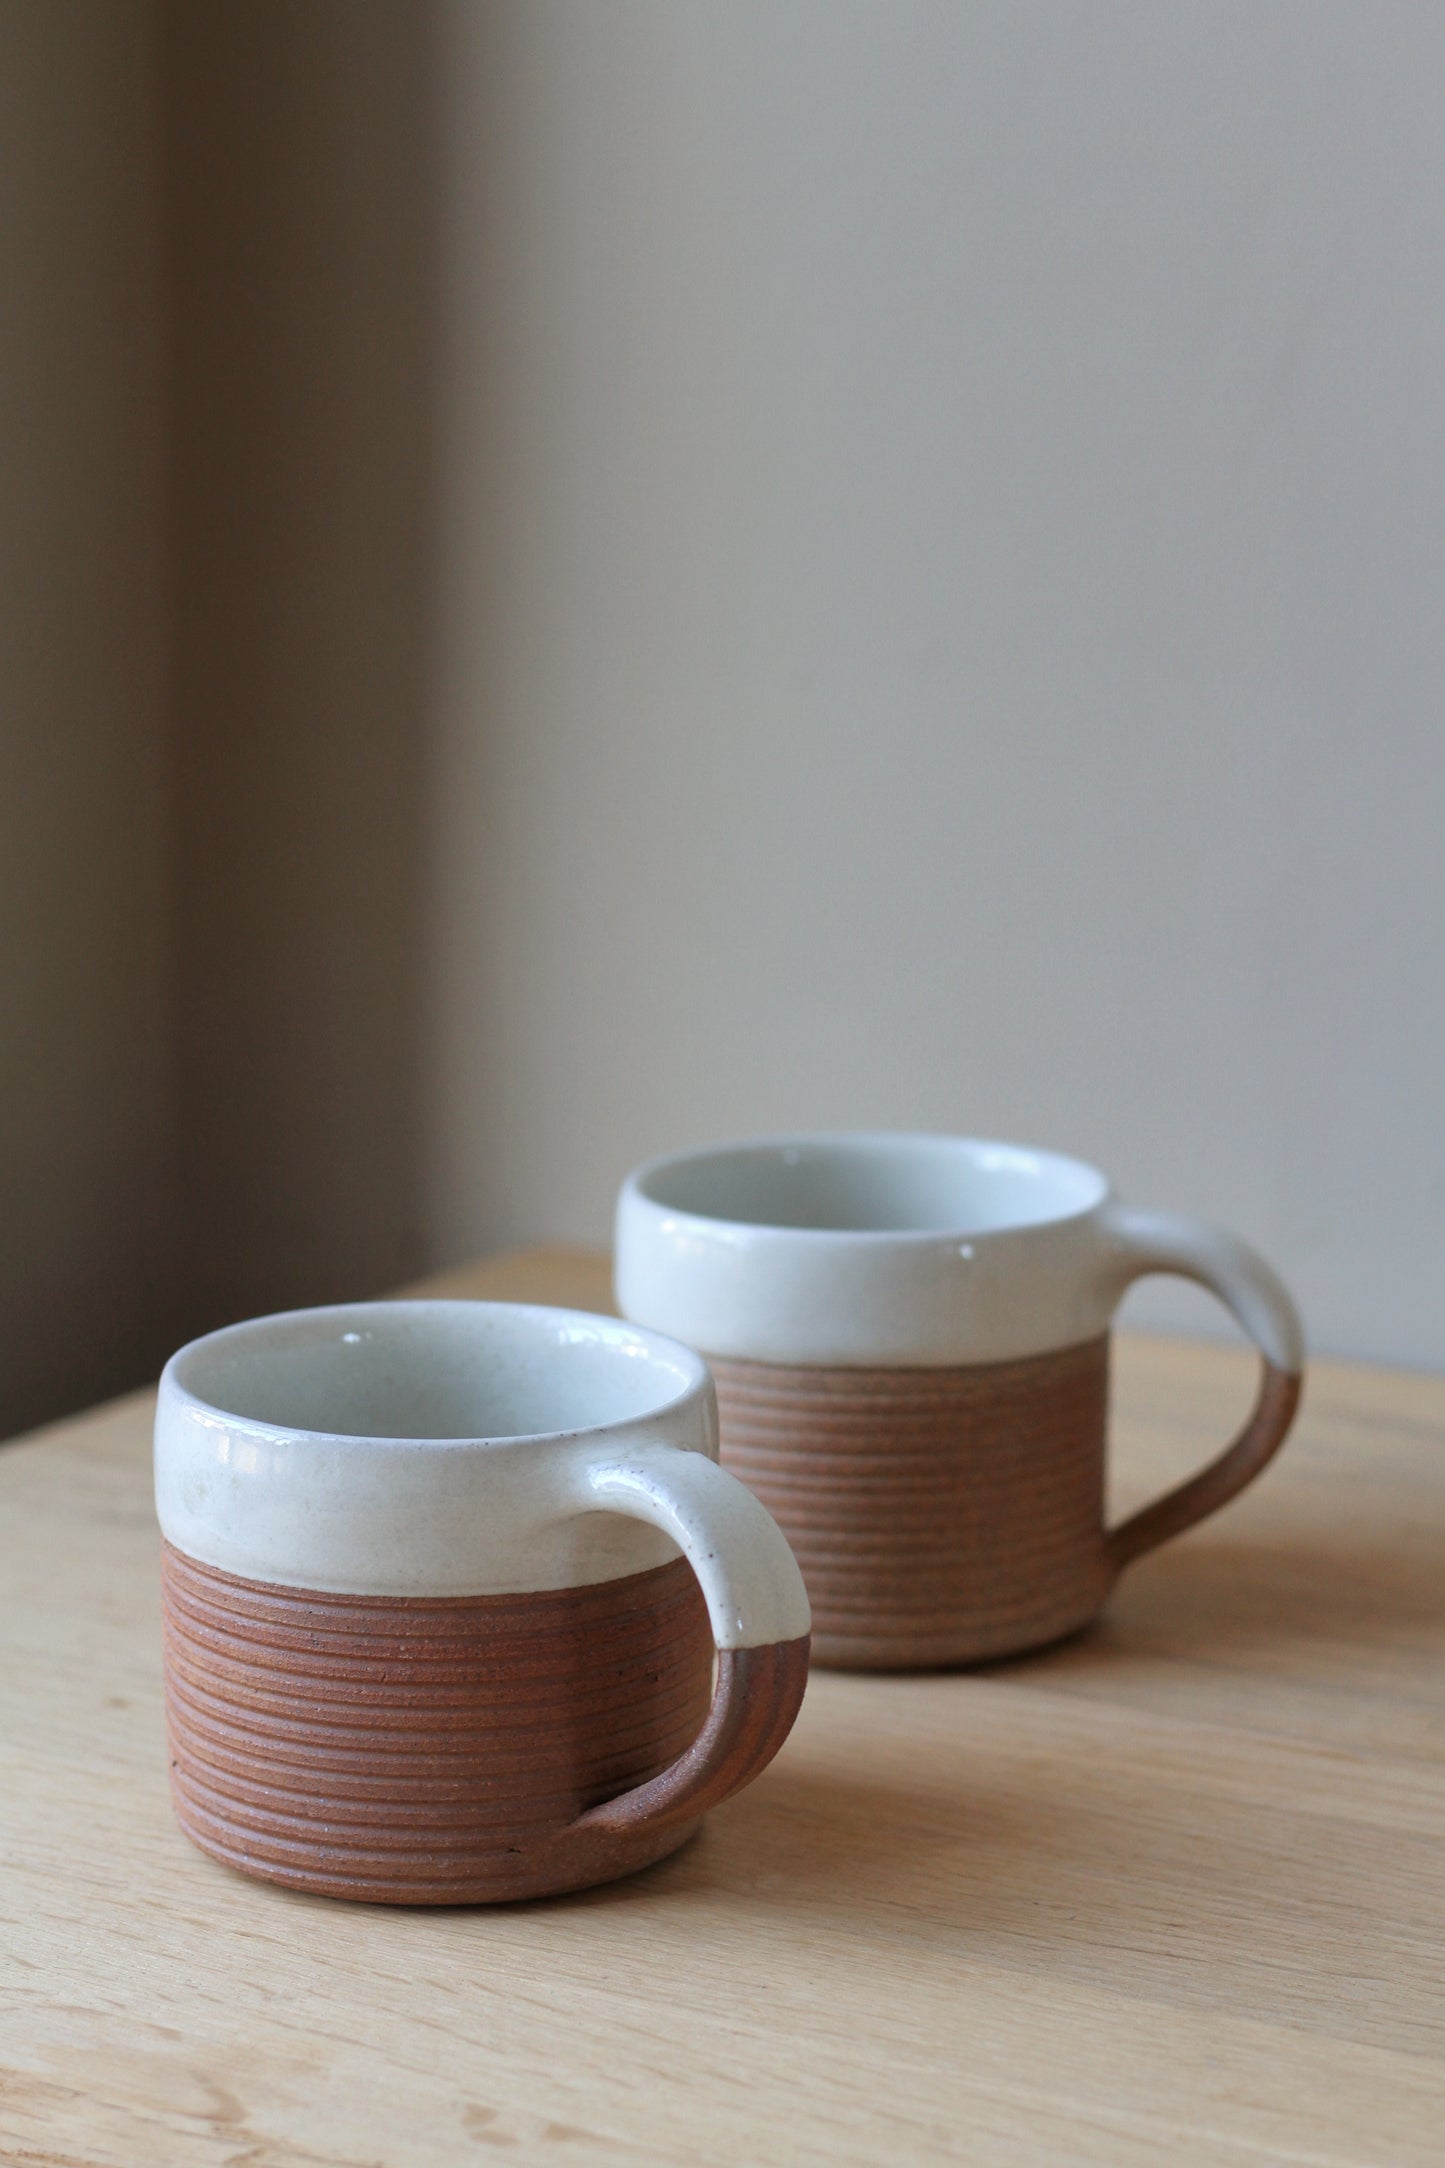 ribbed handmade terracotta coffee mug with a half white glaze rim